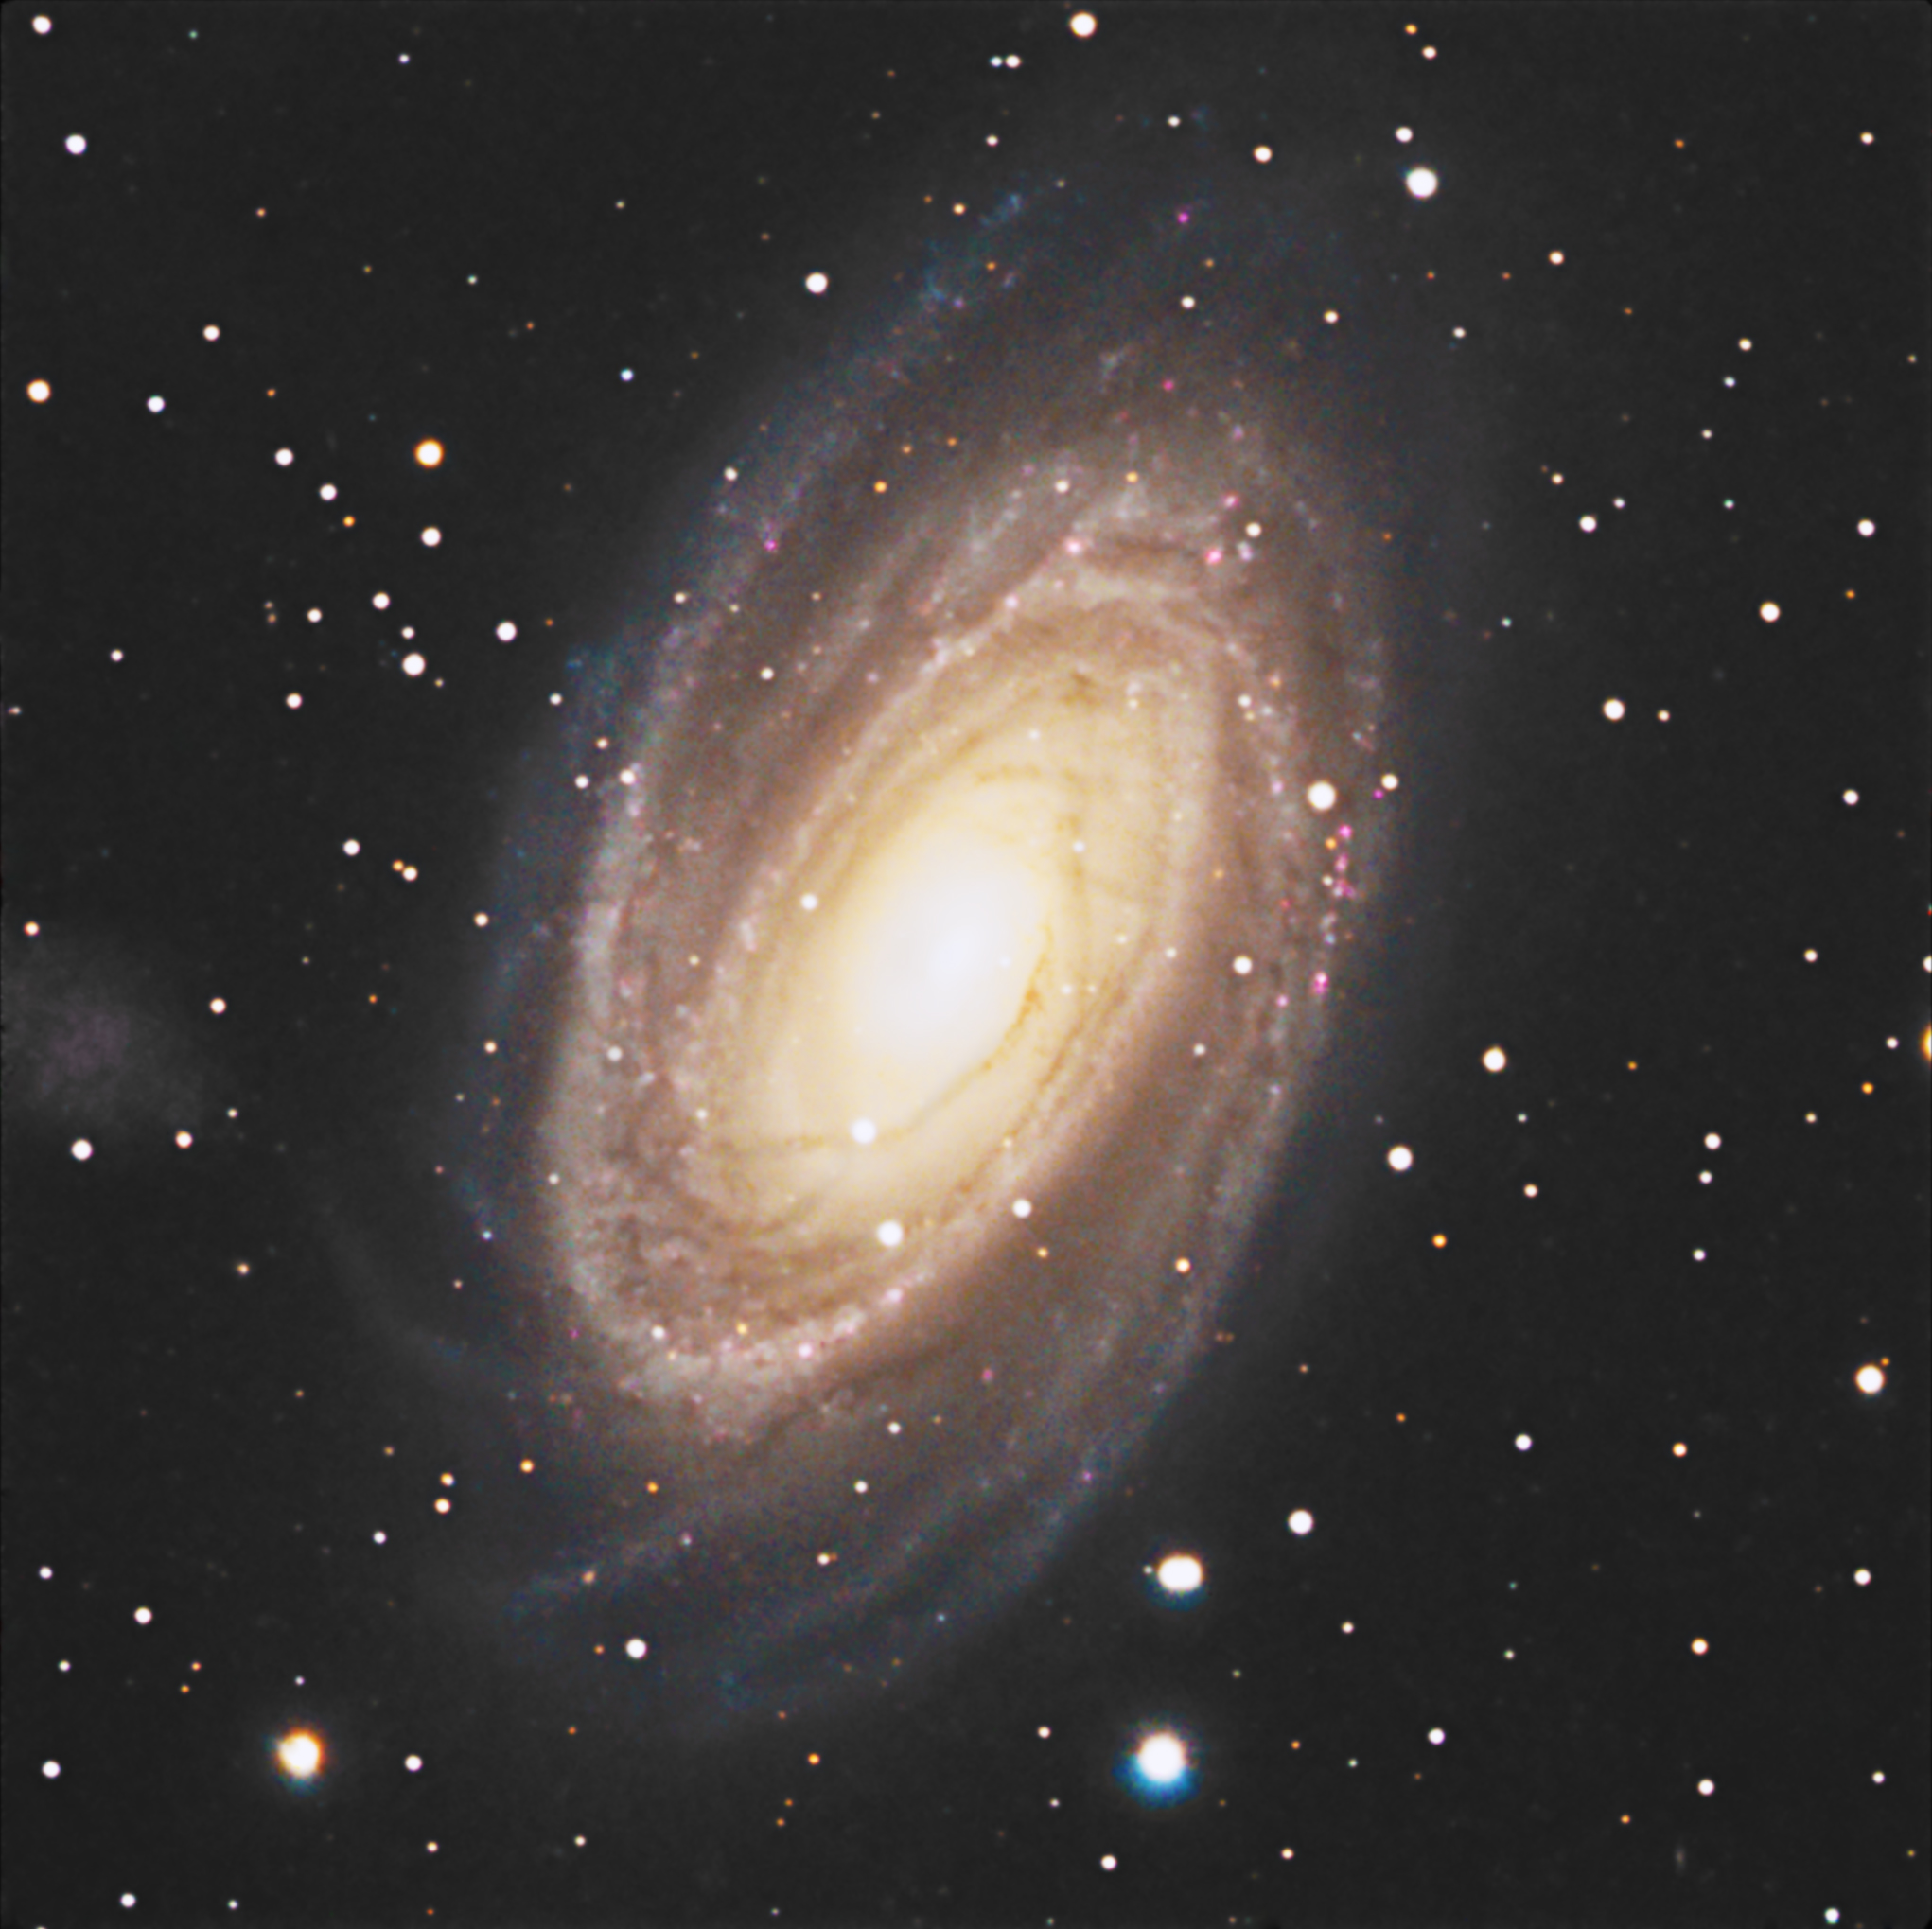 Messier 81 - Bode's Galaxy